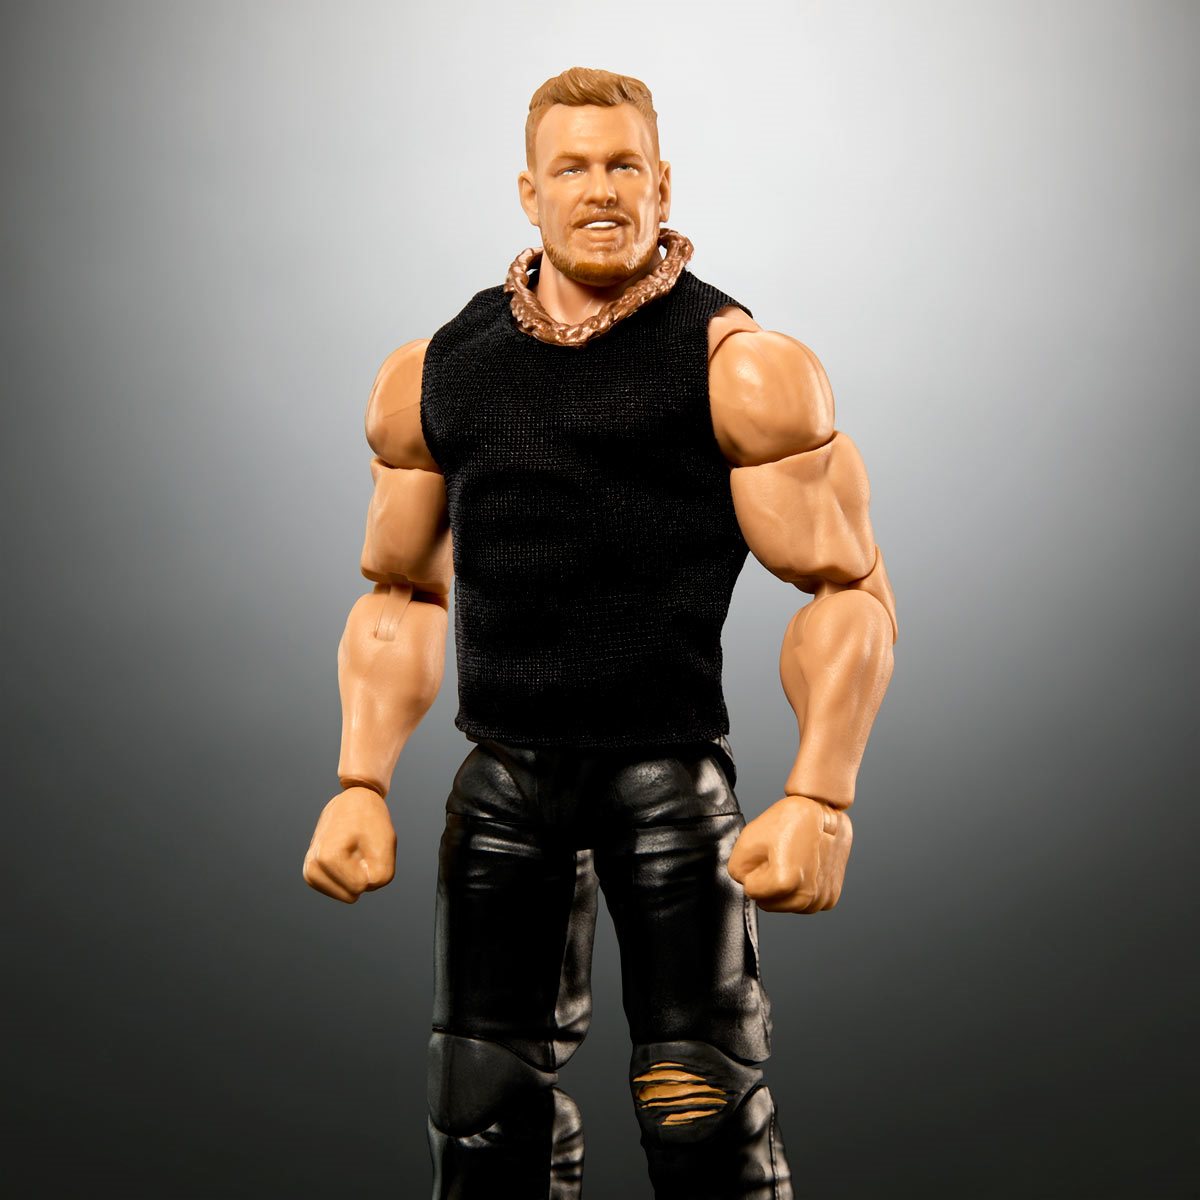 WWE Elite Collection WrestleMania 2024 Pat McAfee